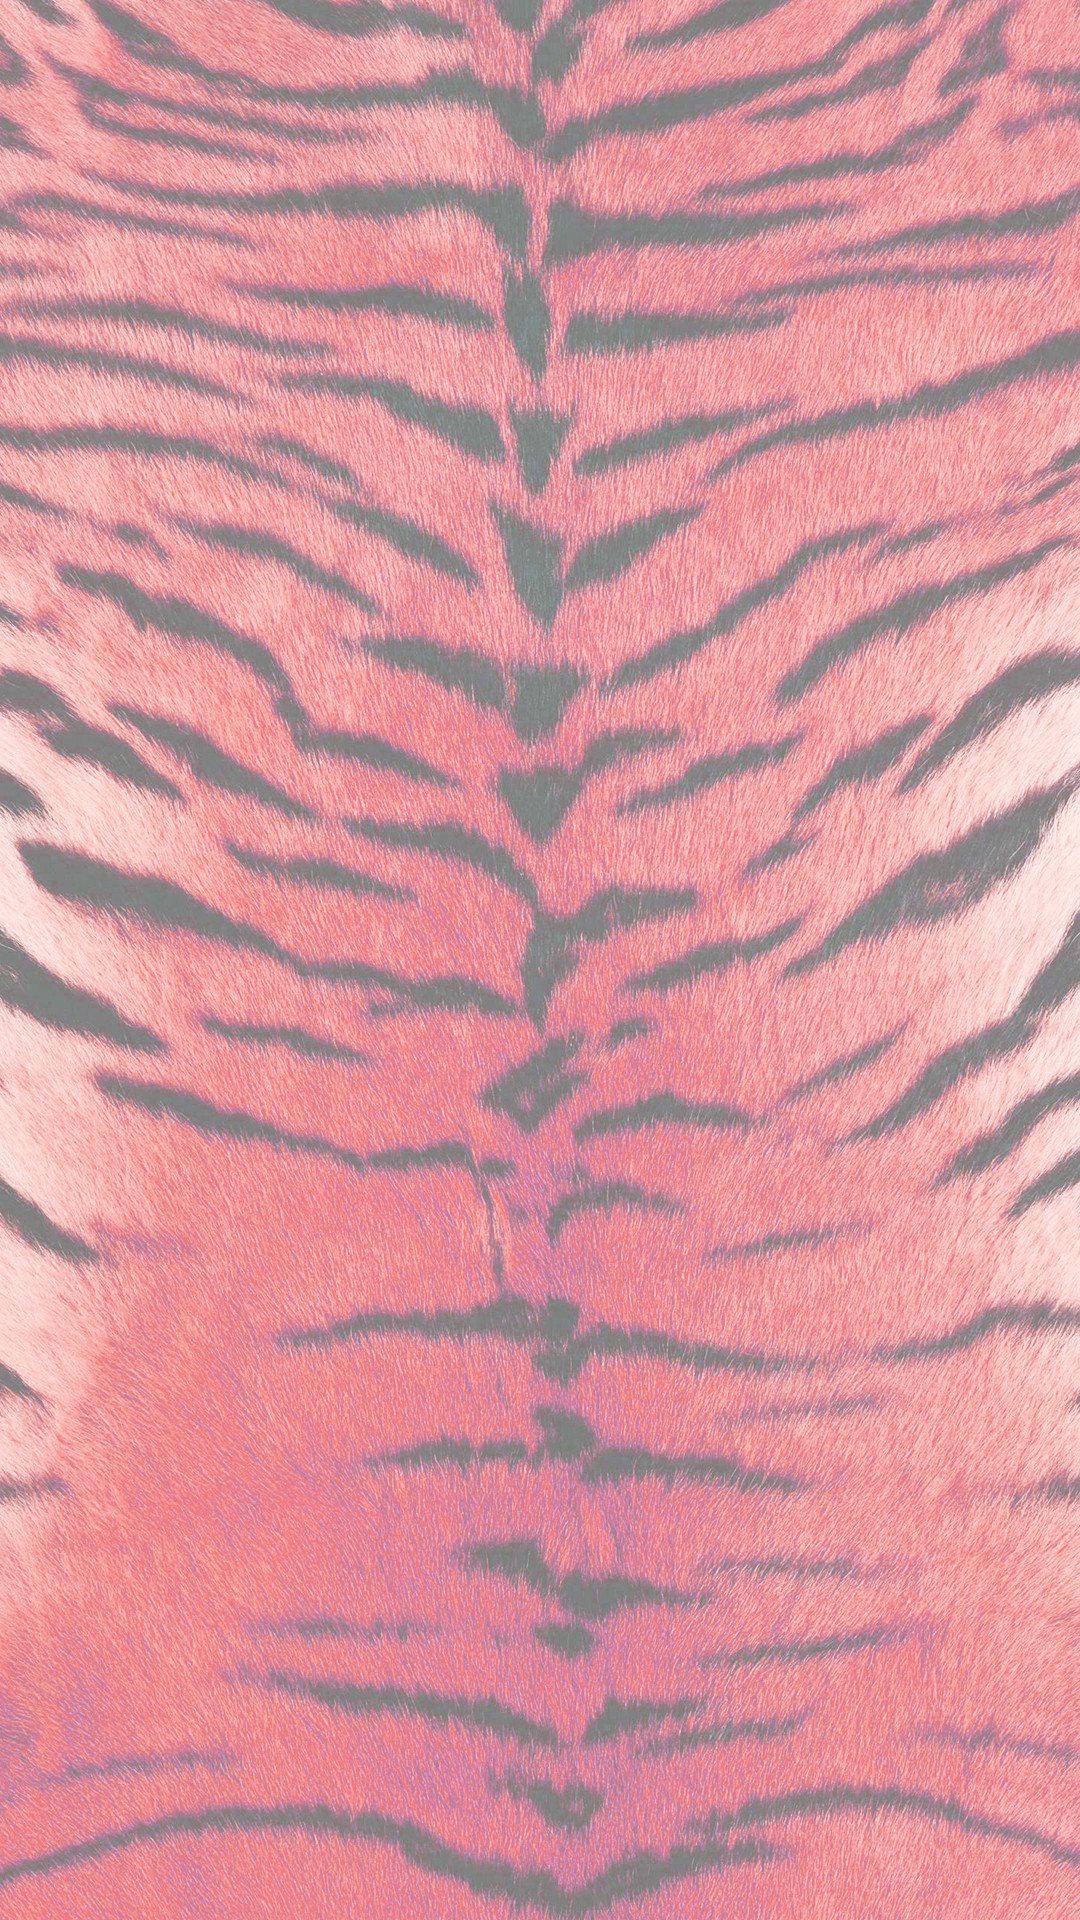 1080x1920 Fur pattern tiger Red iPhone7 Plus Wallpaper